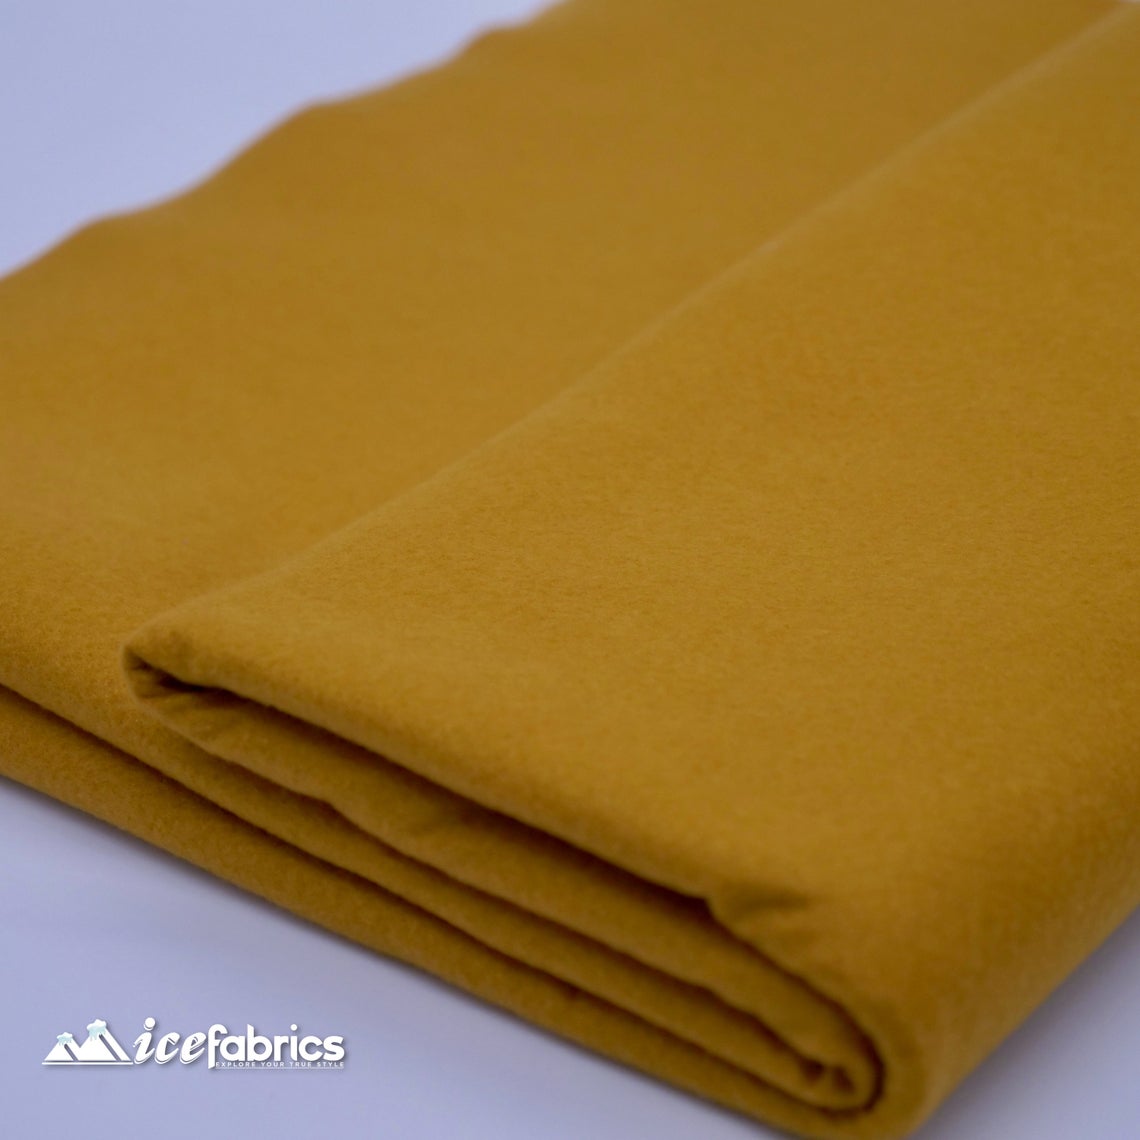 Acrylic Felt Fabric By The Roll | 20 yards | Wholesale Fabric ICE FABRICS Gold